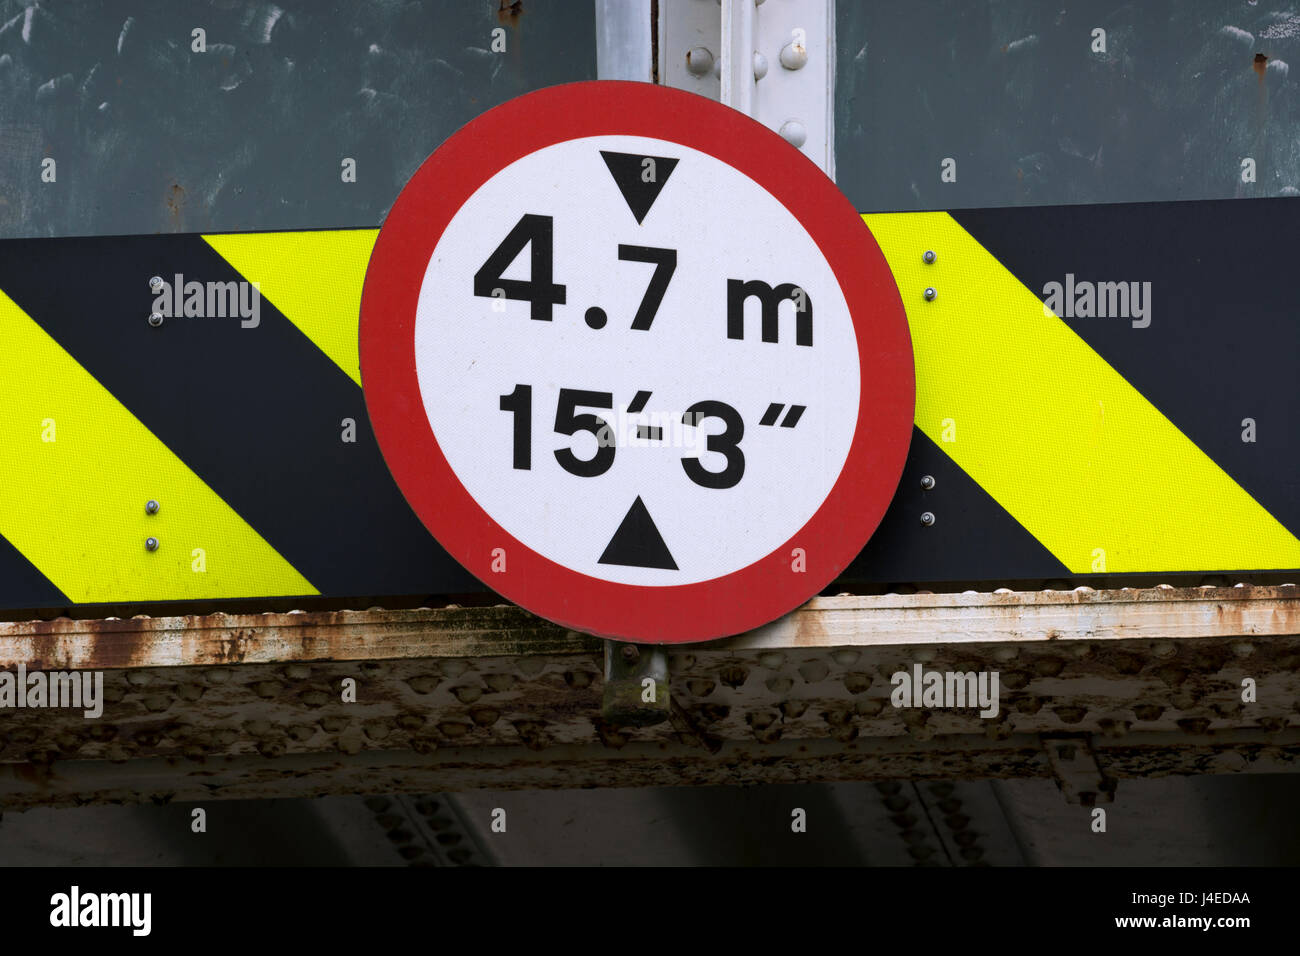 Railway bridge height restriction sign, UK Stock Photo